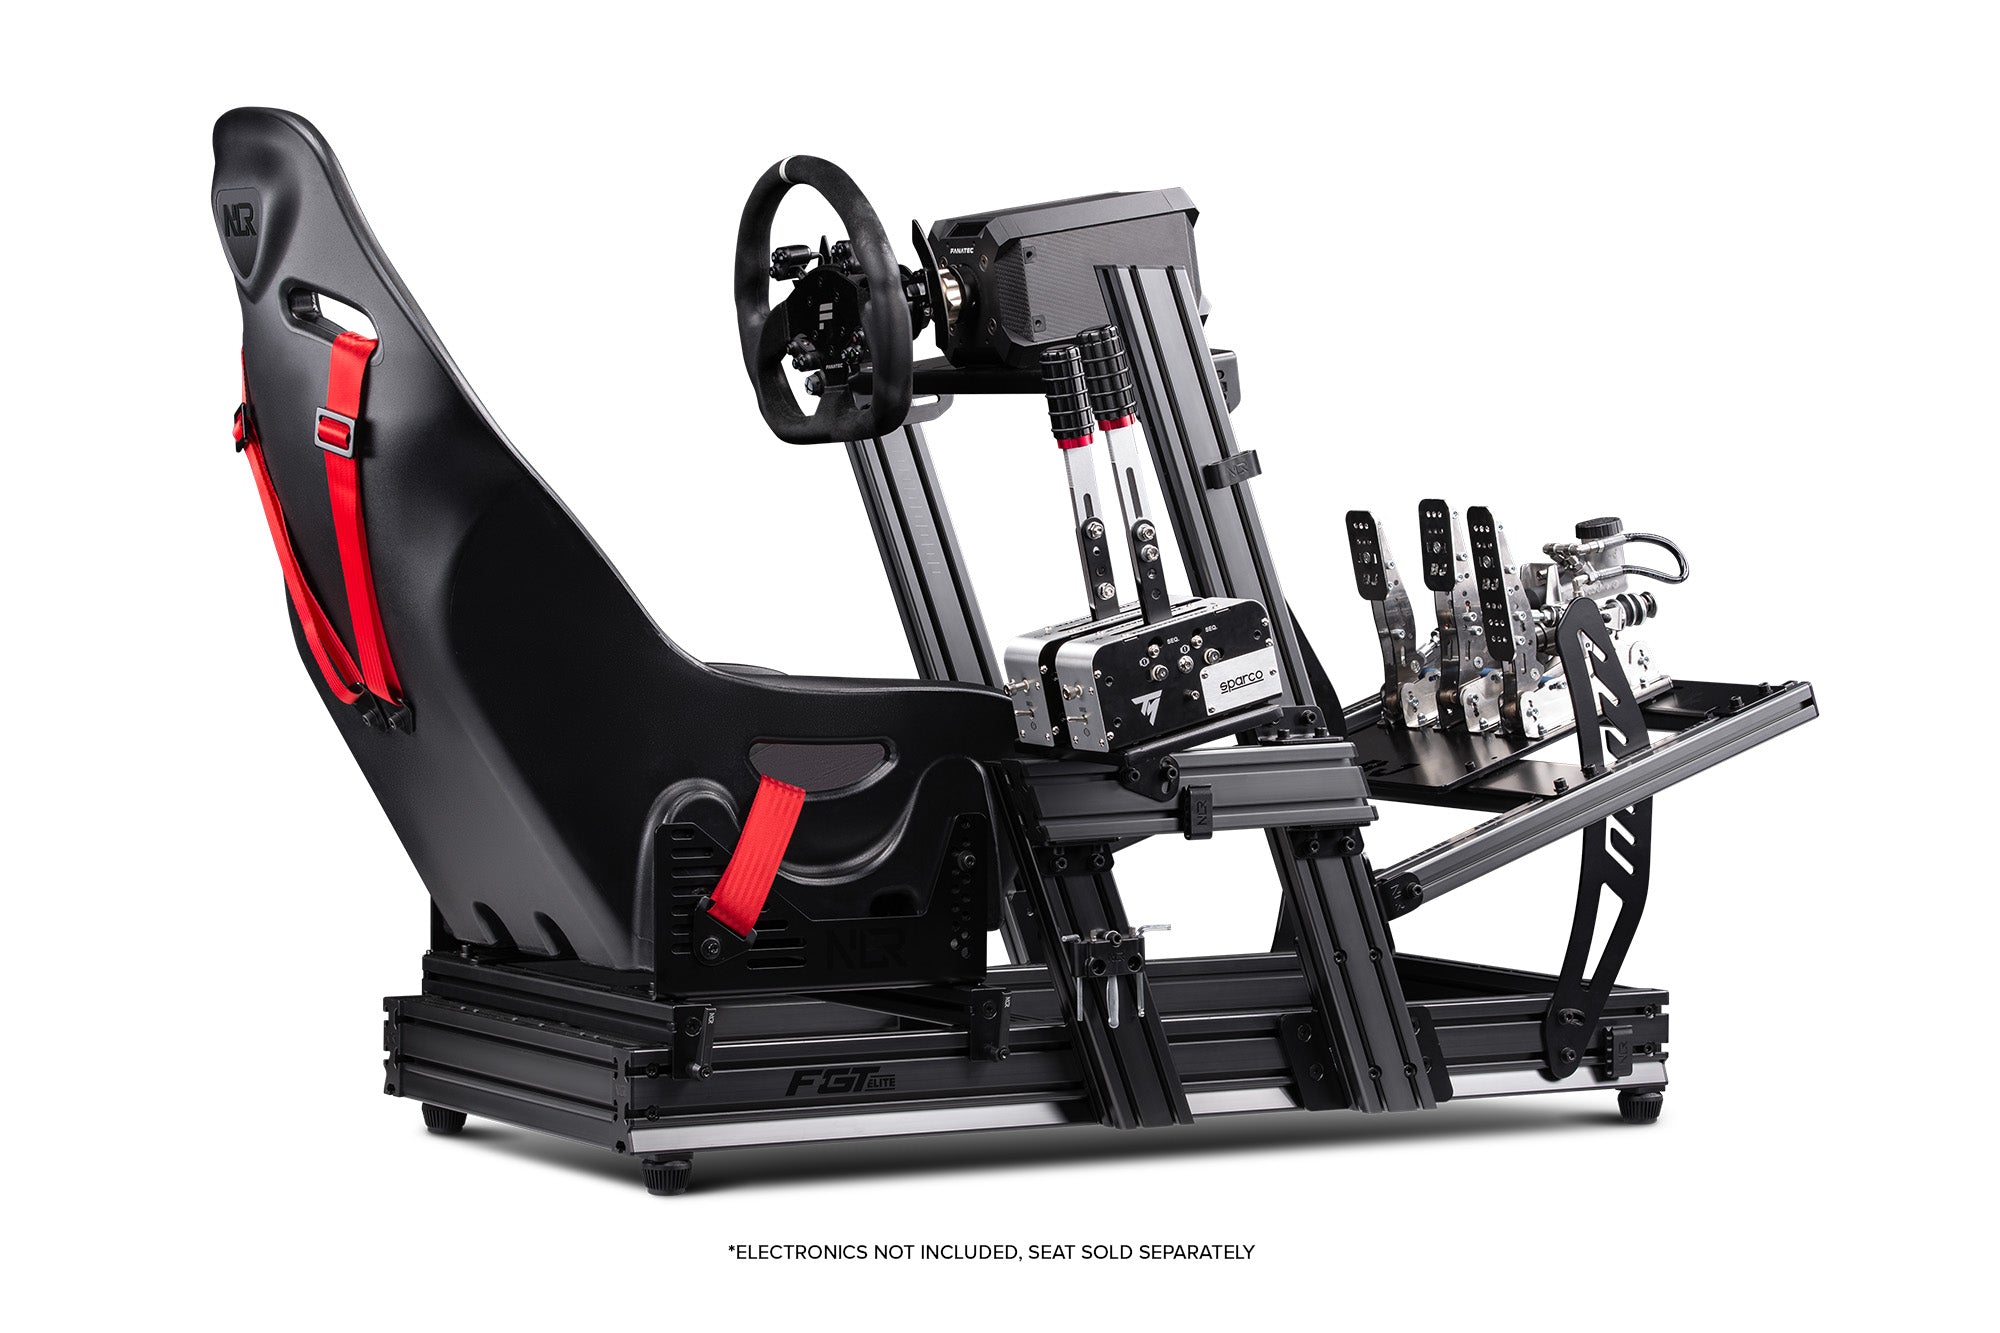 Next Level Racing GTtrack Simulator Cockpit